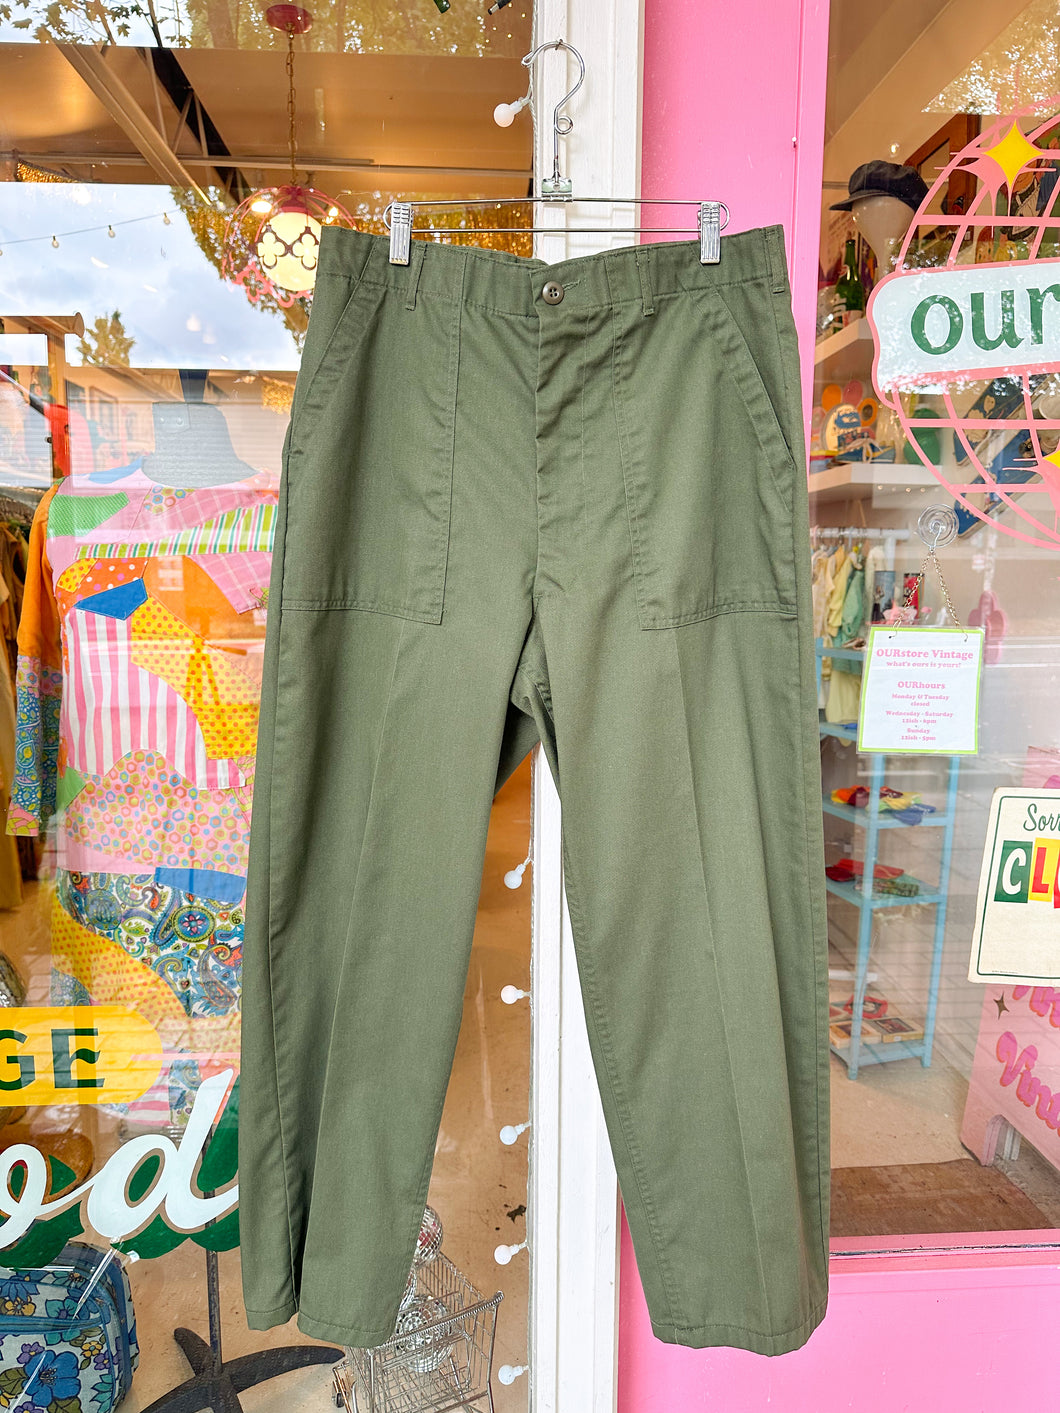 Green military work pants